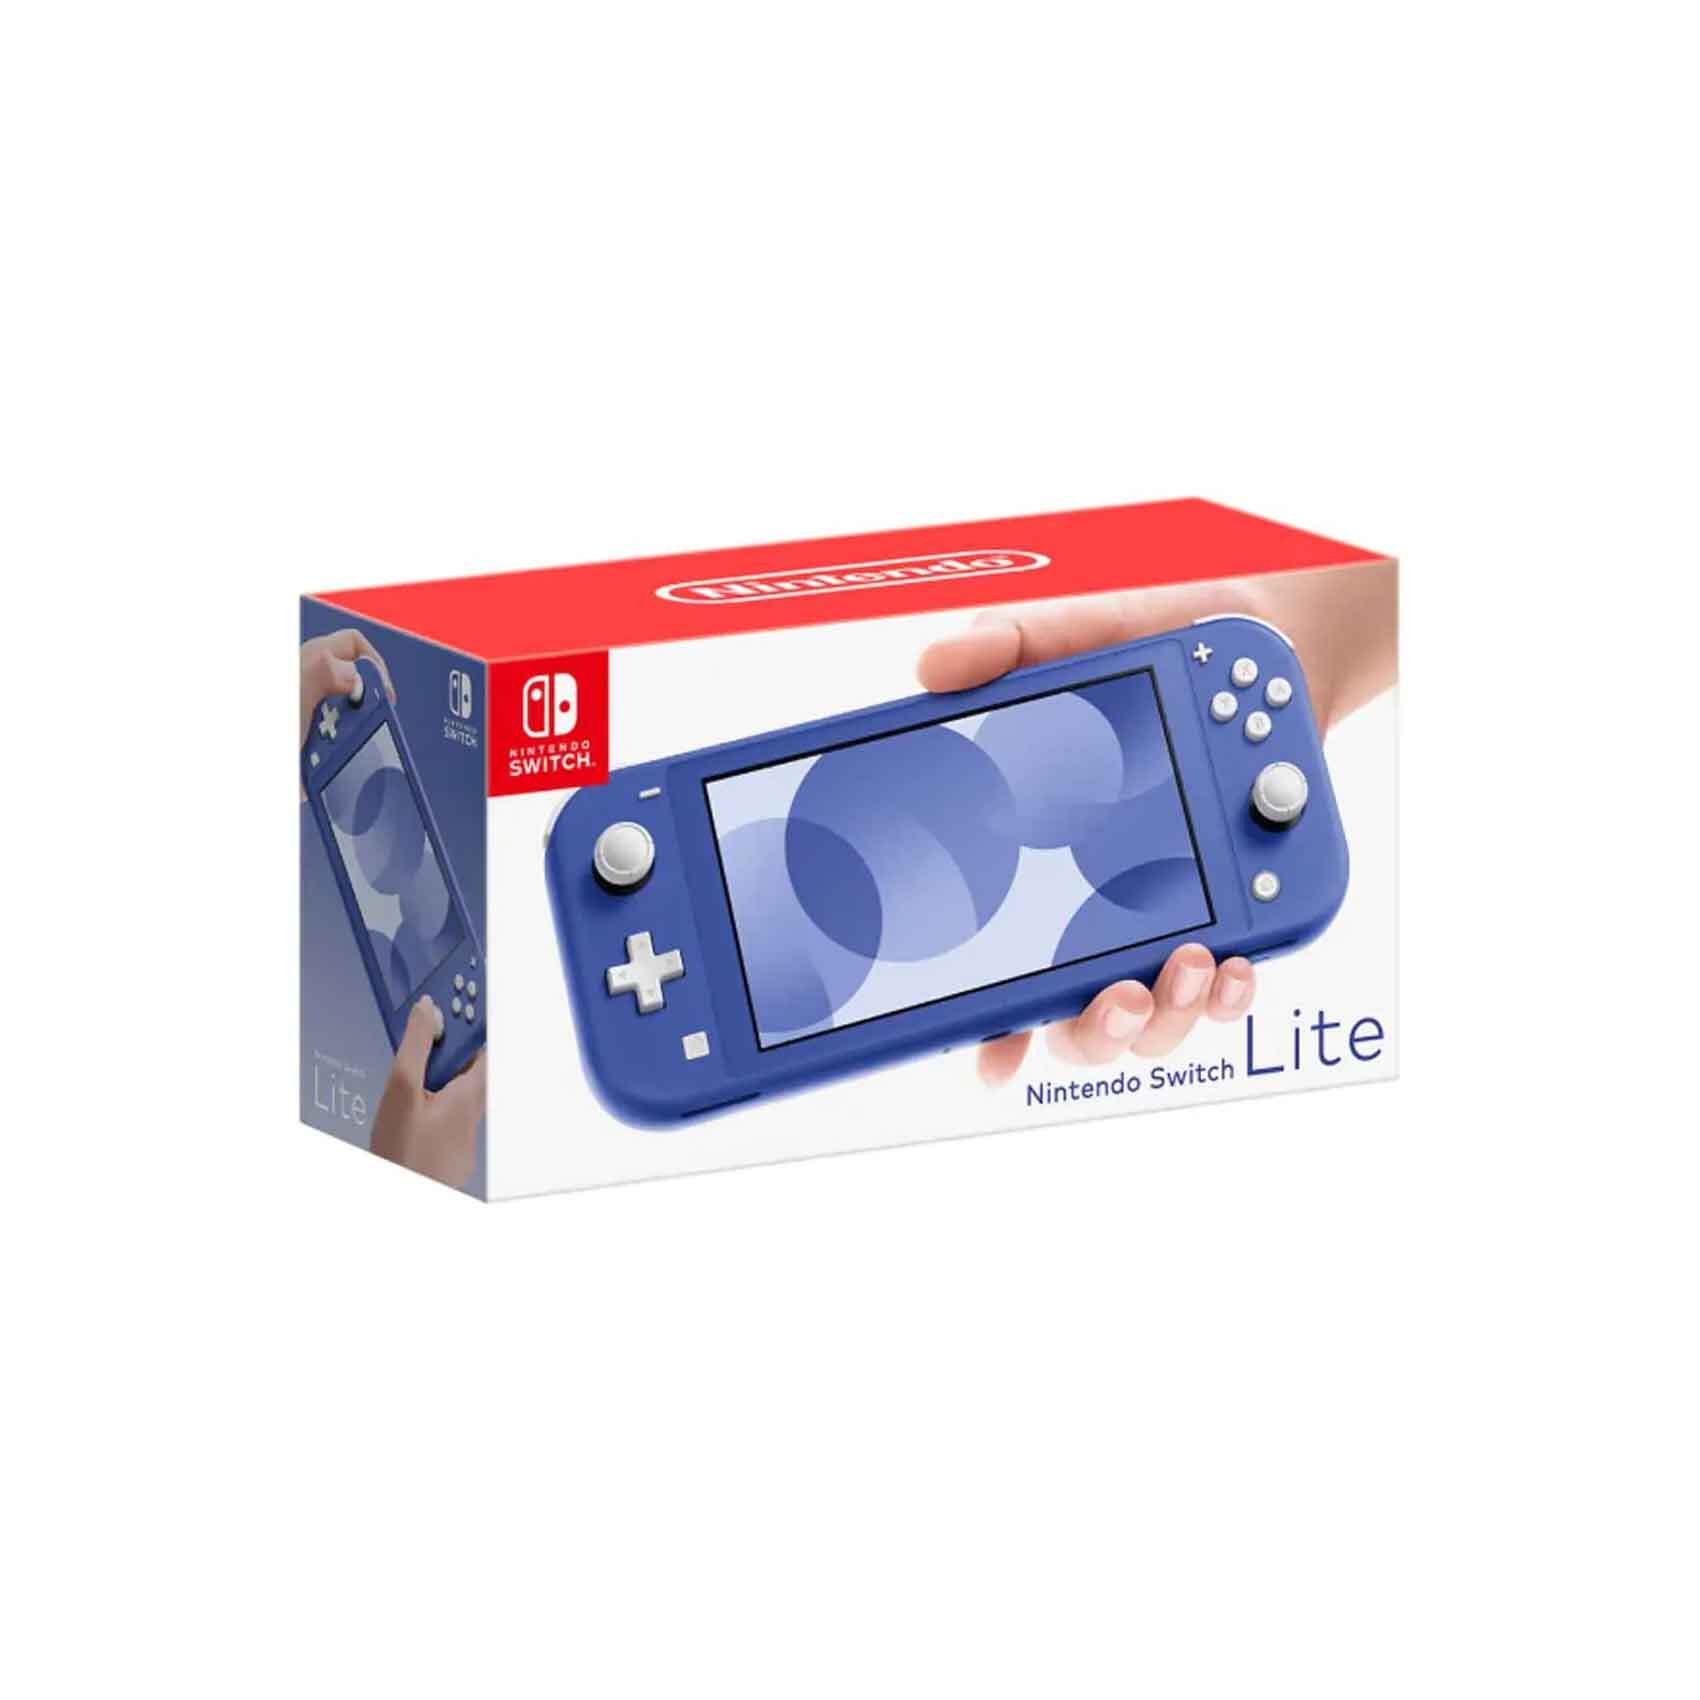 Nintendo Switch Lite Console - Blue Online | Carrefour Qatar